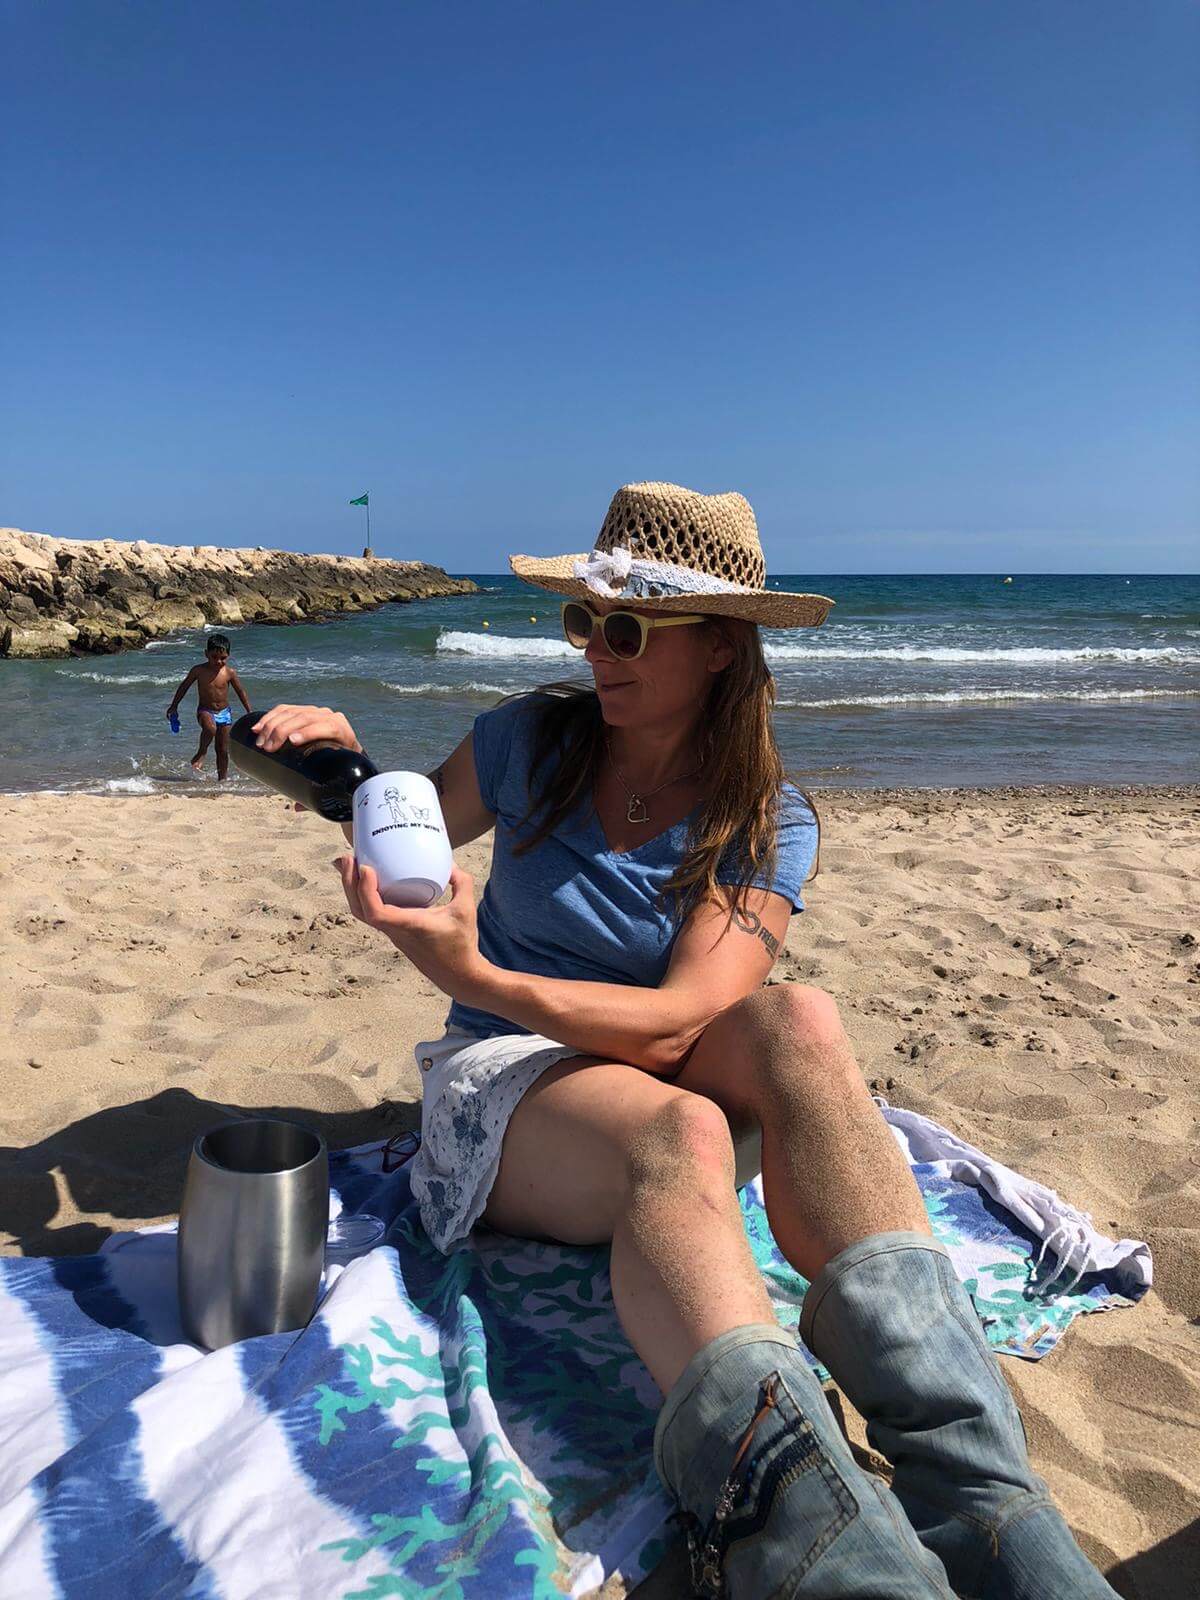 Enjoying chilled wine on the beach